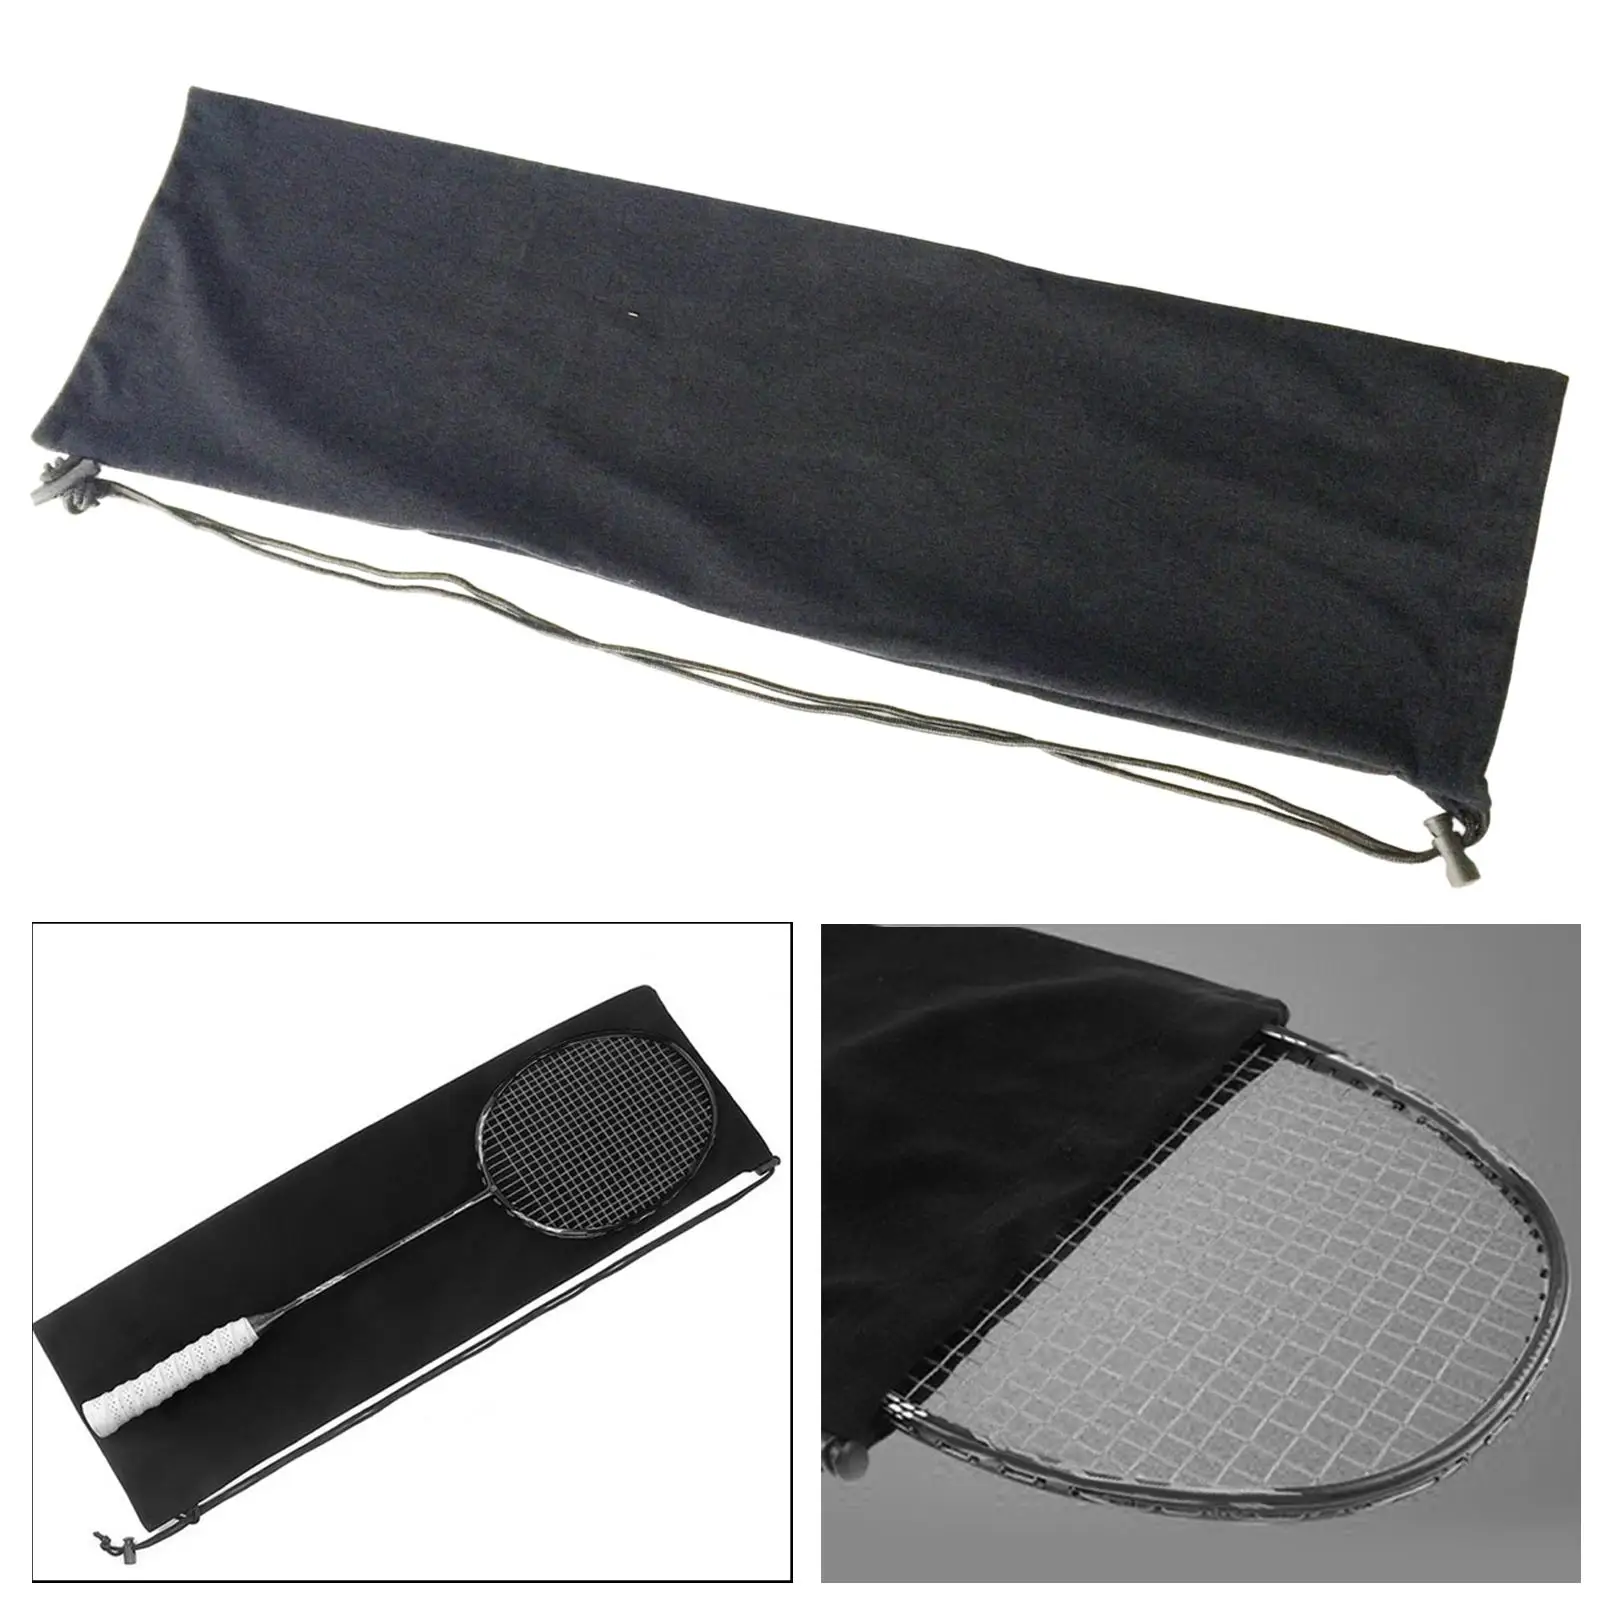 Racquet Tennis Bag Drawstring Storage Bag Durable Carry Case Pouch Carrier for Beginner Tennis Players Women Men Outdoor Sports